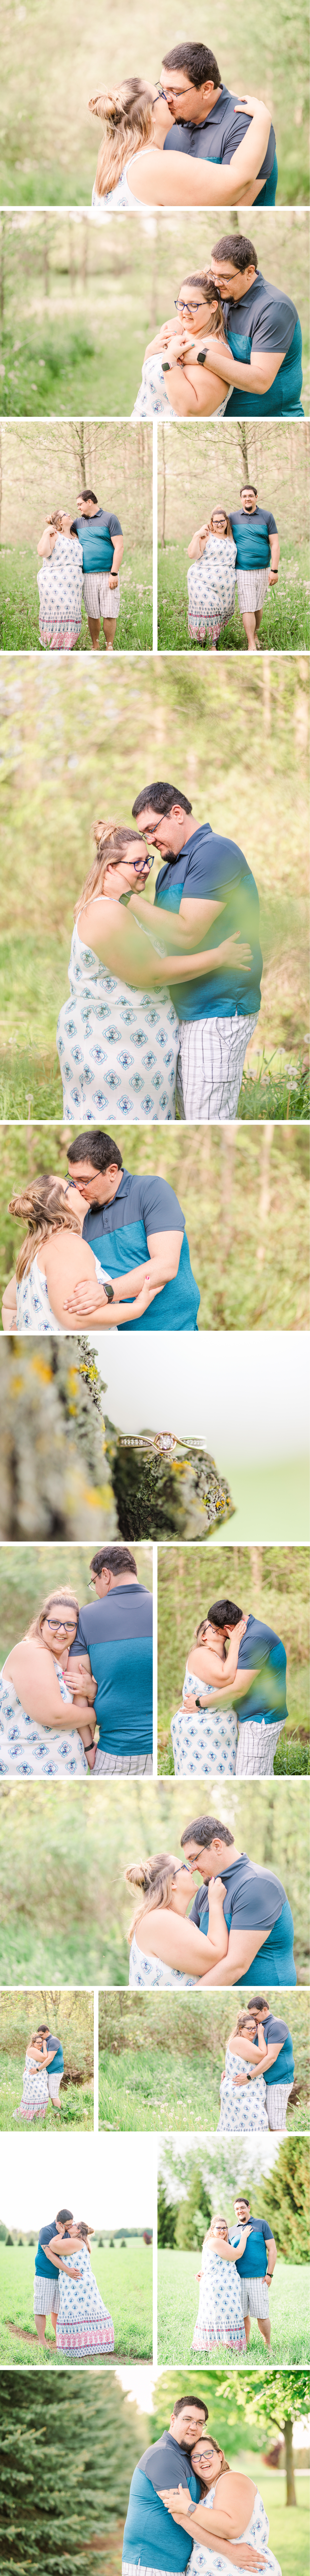 Aiden Laurette Photography | Wedding photographer | Engagement photo | Couples photo | Huron County wedding photographer |Engagement Session | Wedding photos | Ontario wedding photography